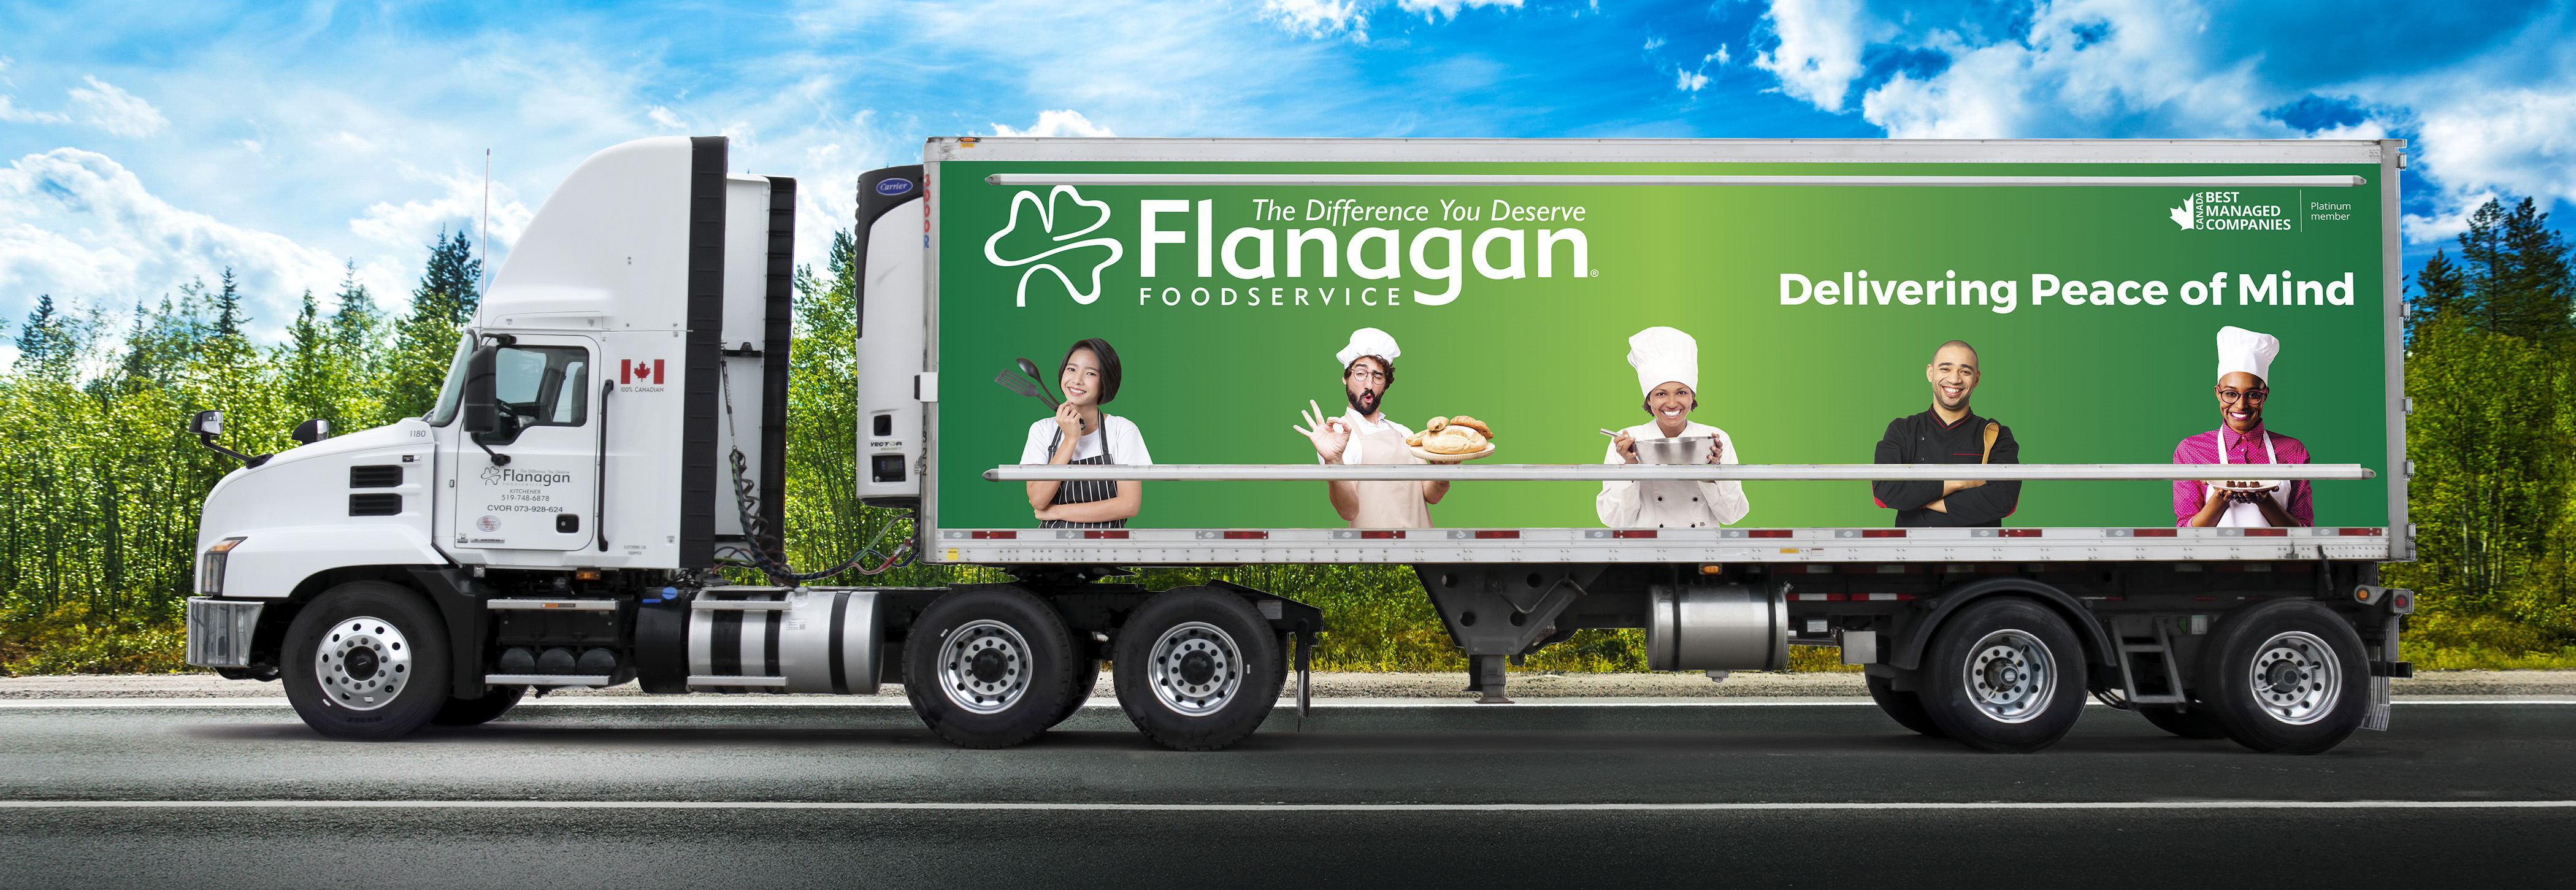 Flanagan Foodservice truck